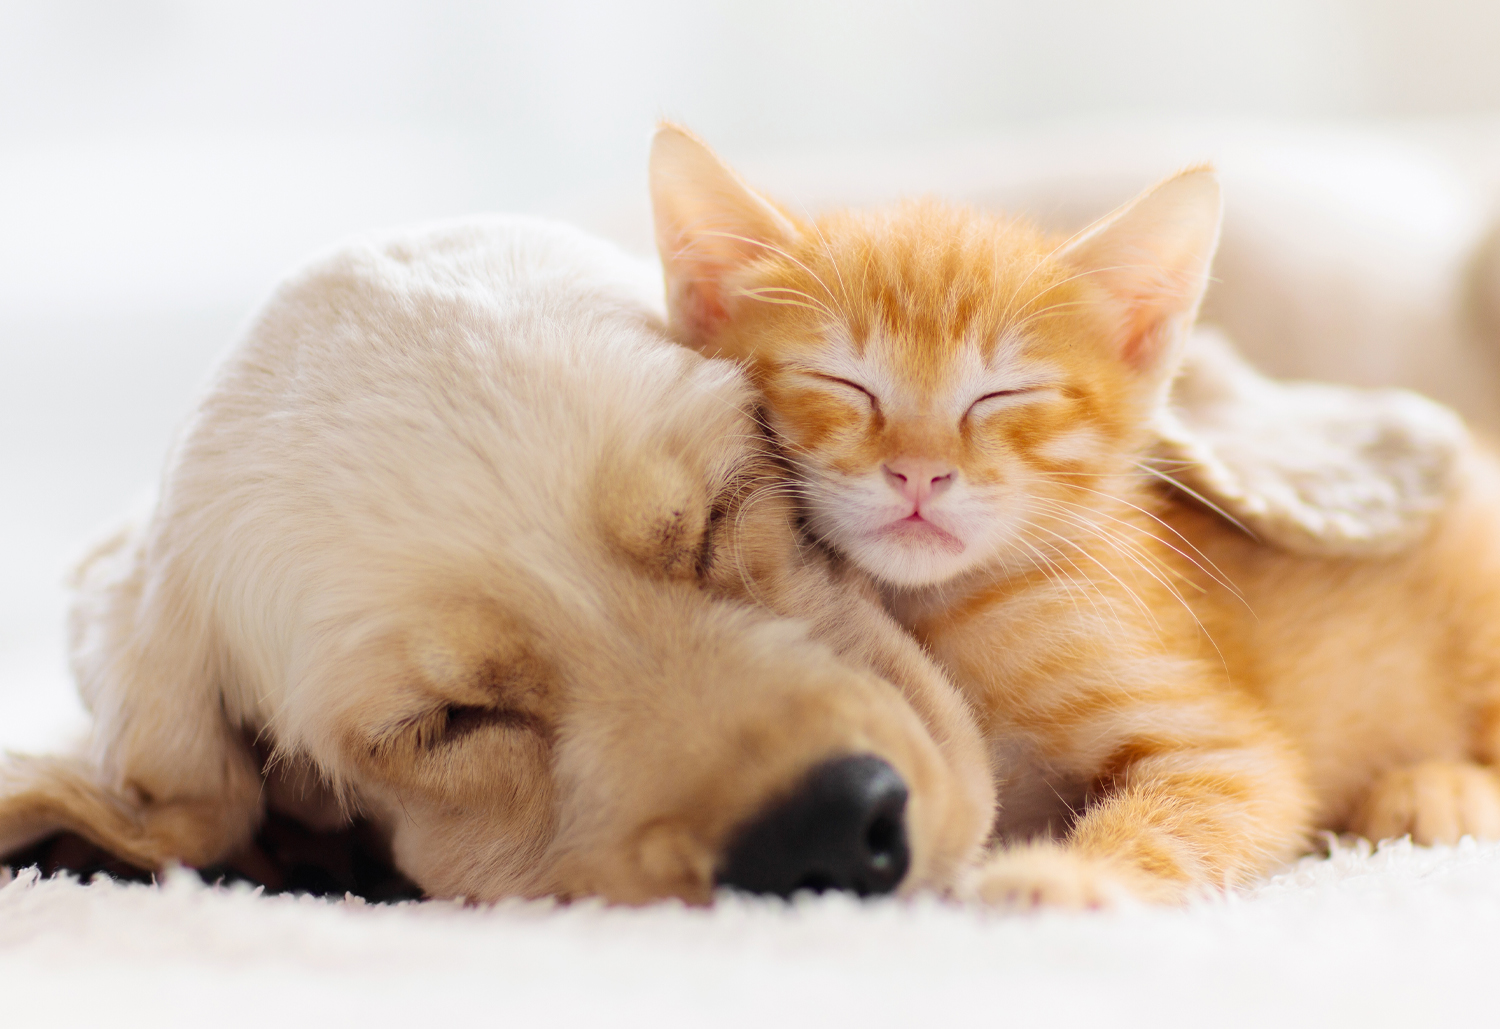 Puppy & Kitten Cuddling